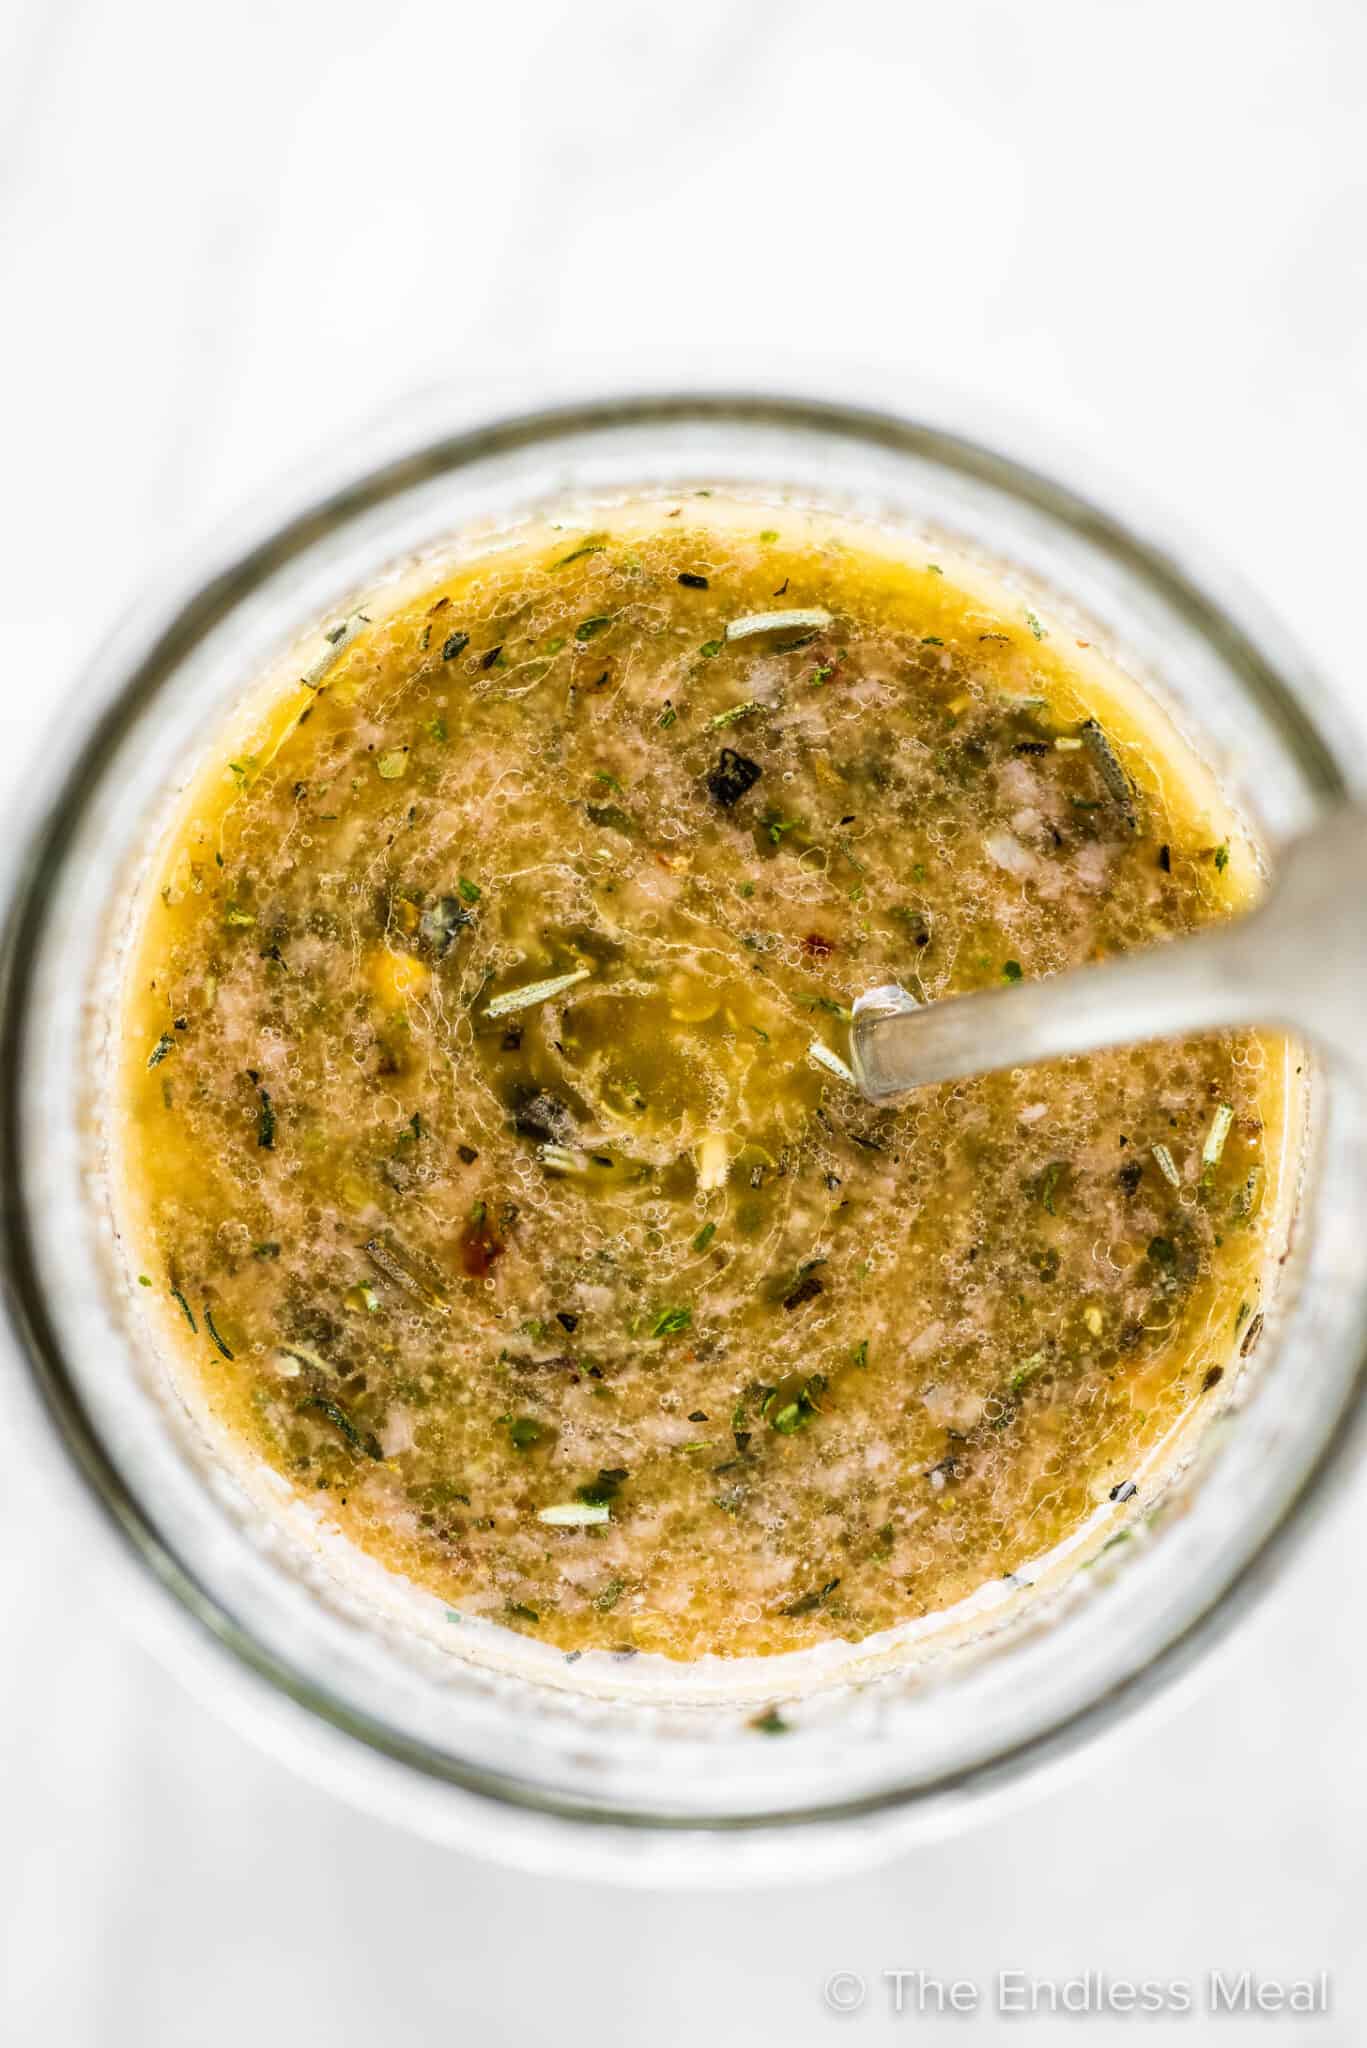 A spoon in a glass jar of Italian salad dressing.